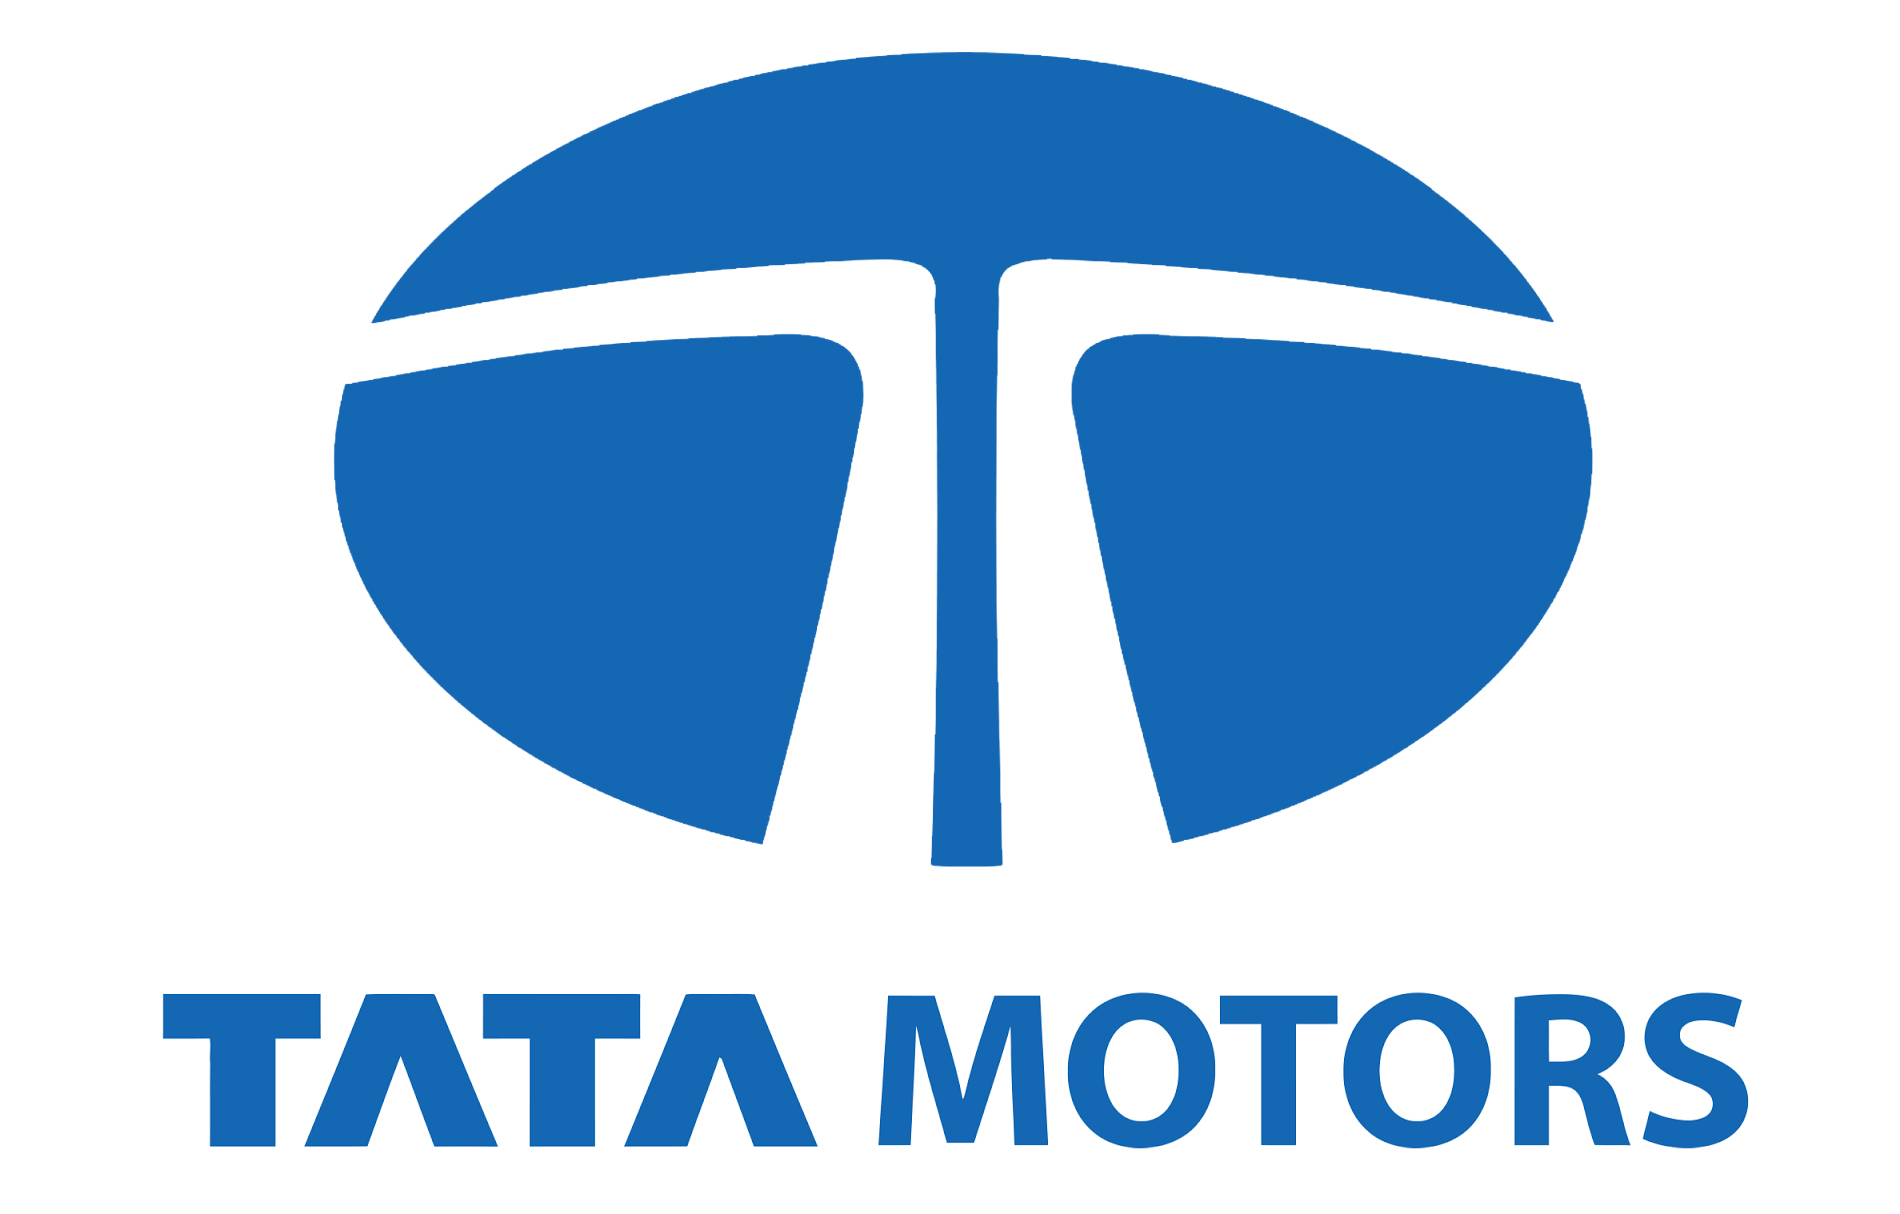 Tata Motors Cars Showroom - National Business Enterprises|Show Room|Automotive